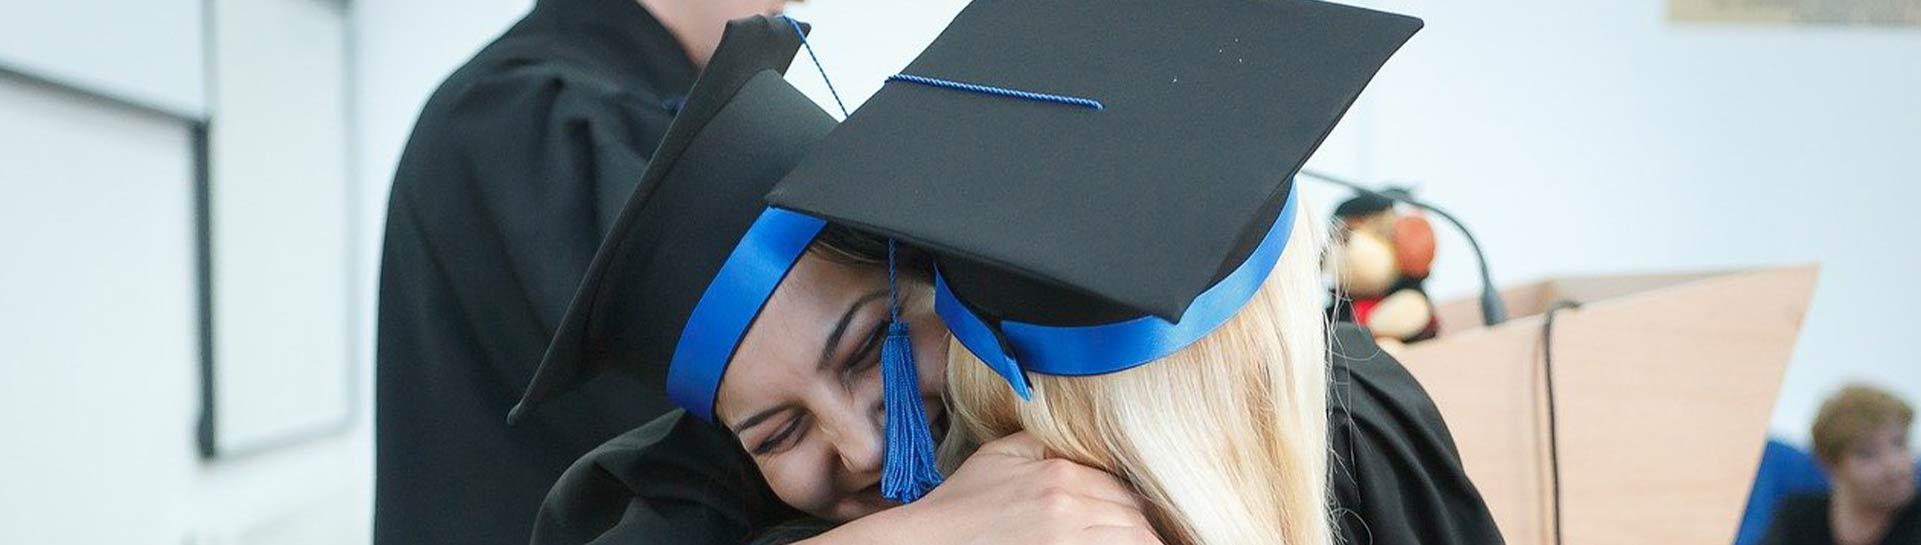 College graduates hugging on graduation day